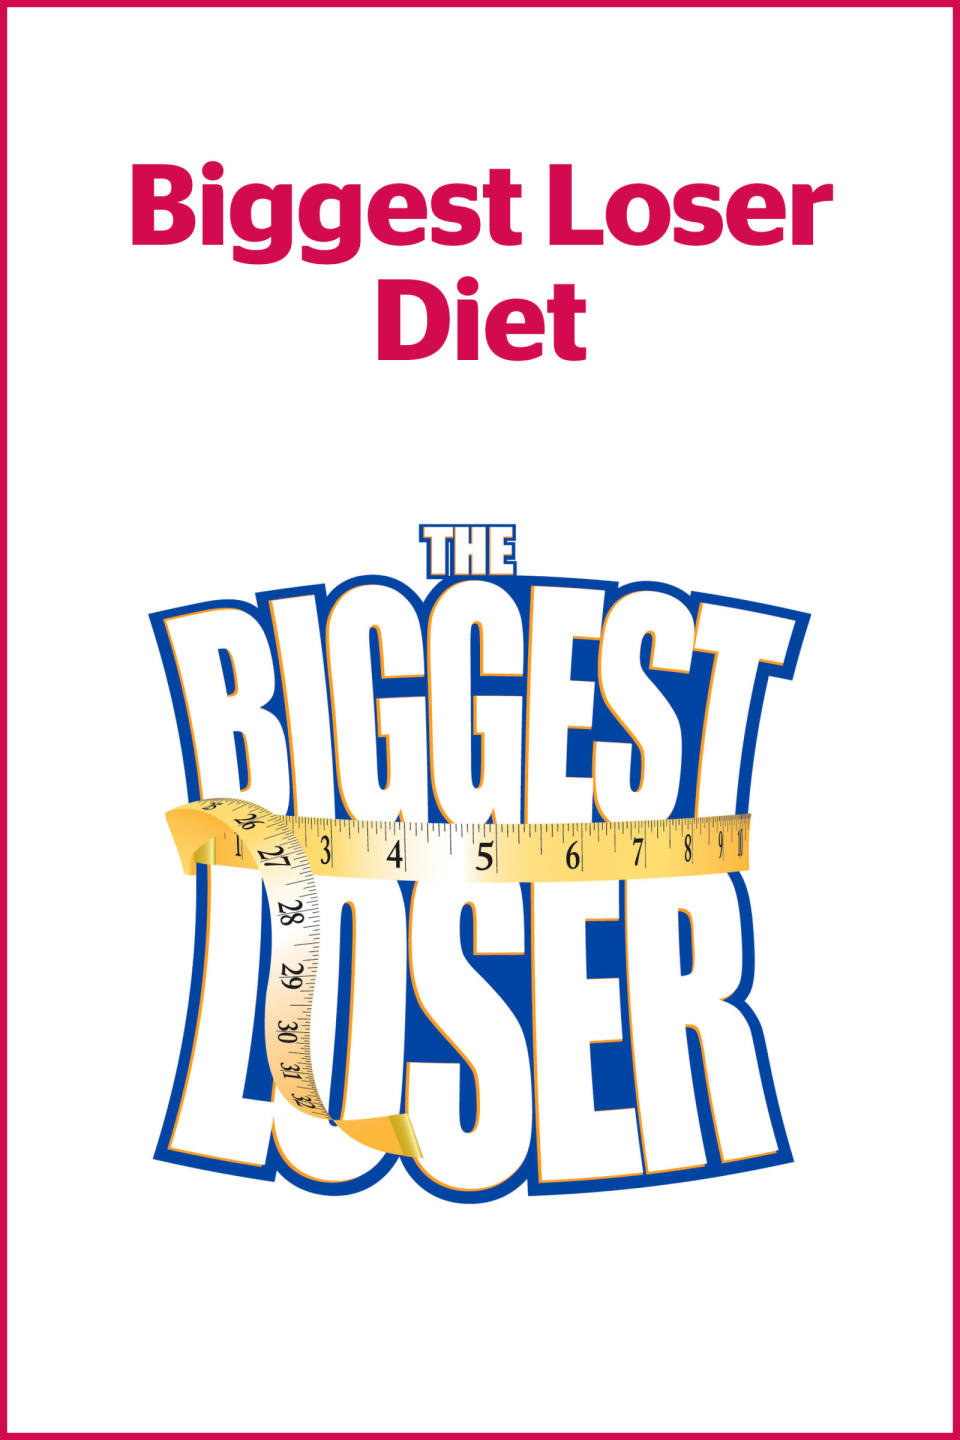 17) Biggest Loser Diet